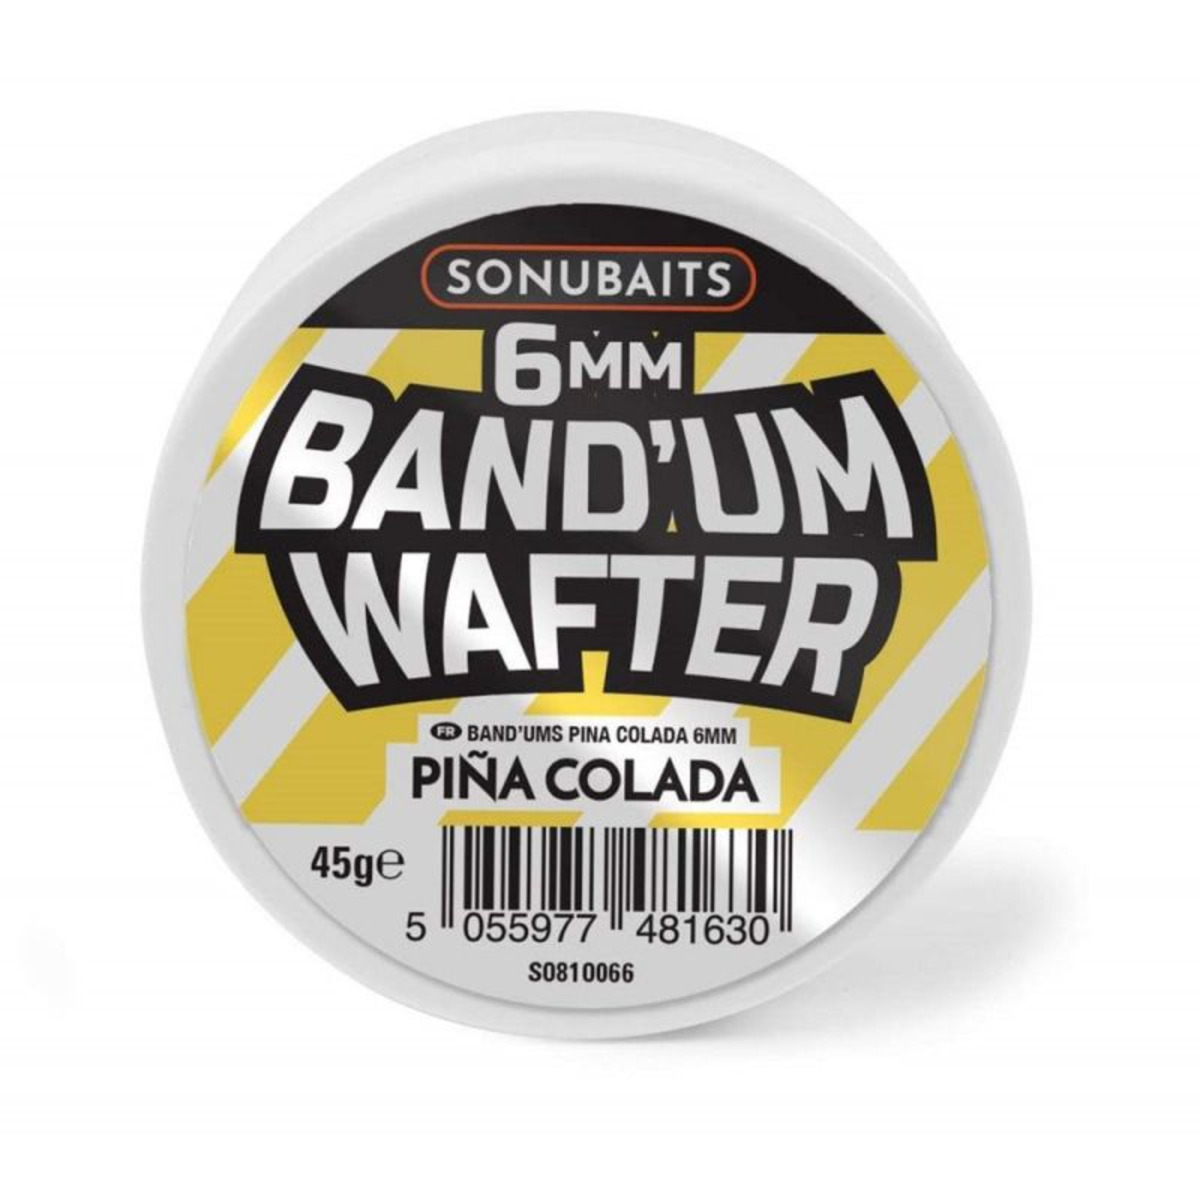 Sonubaits Band’um Wafters - 6 mm - Pina Colada